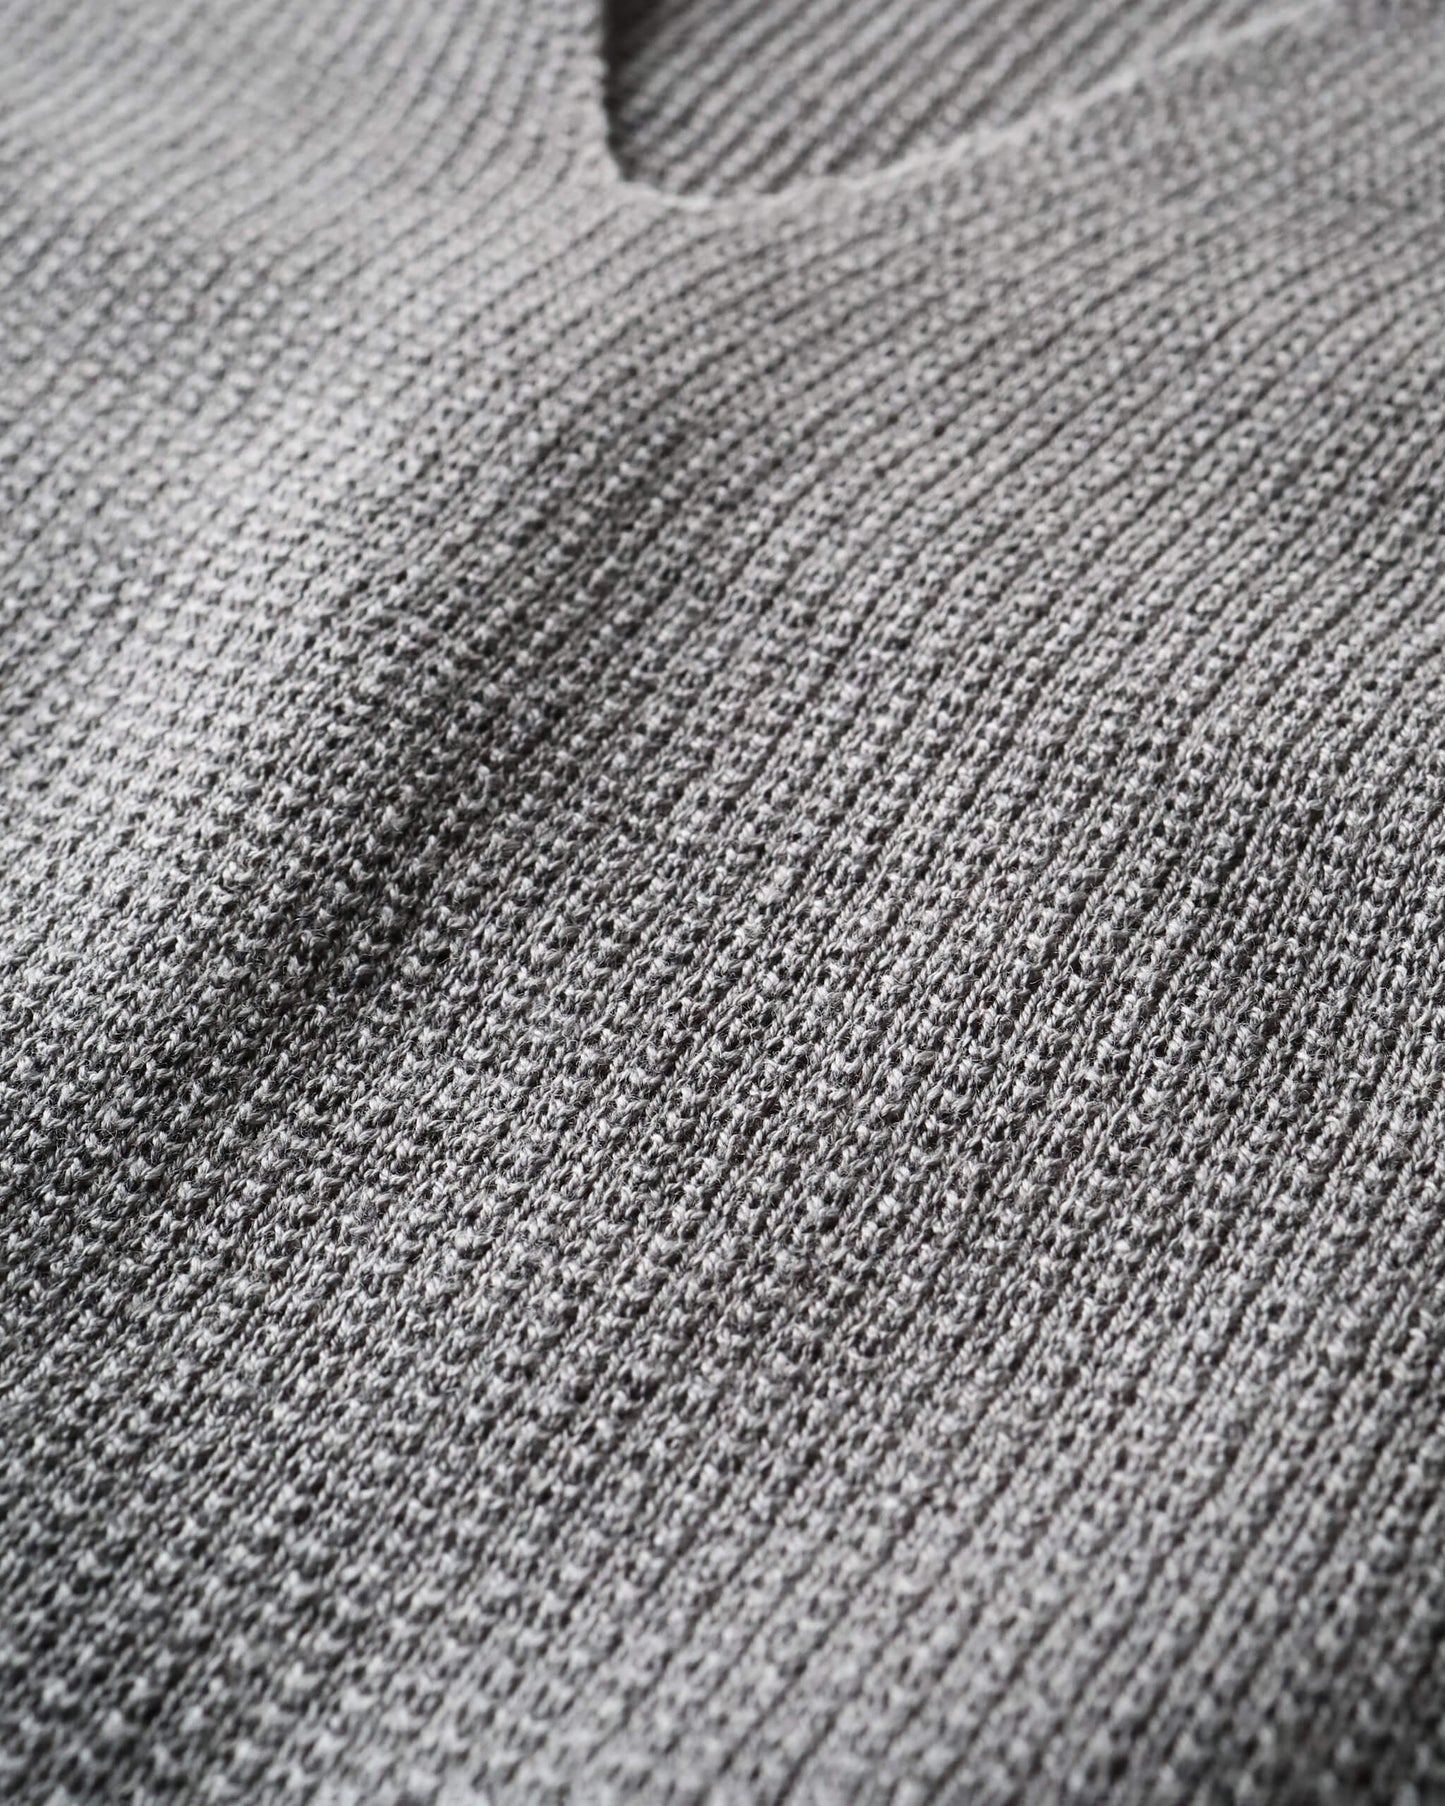 Spun silk cotton Deep V-neck sweater "Silver"